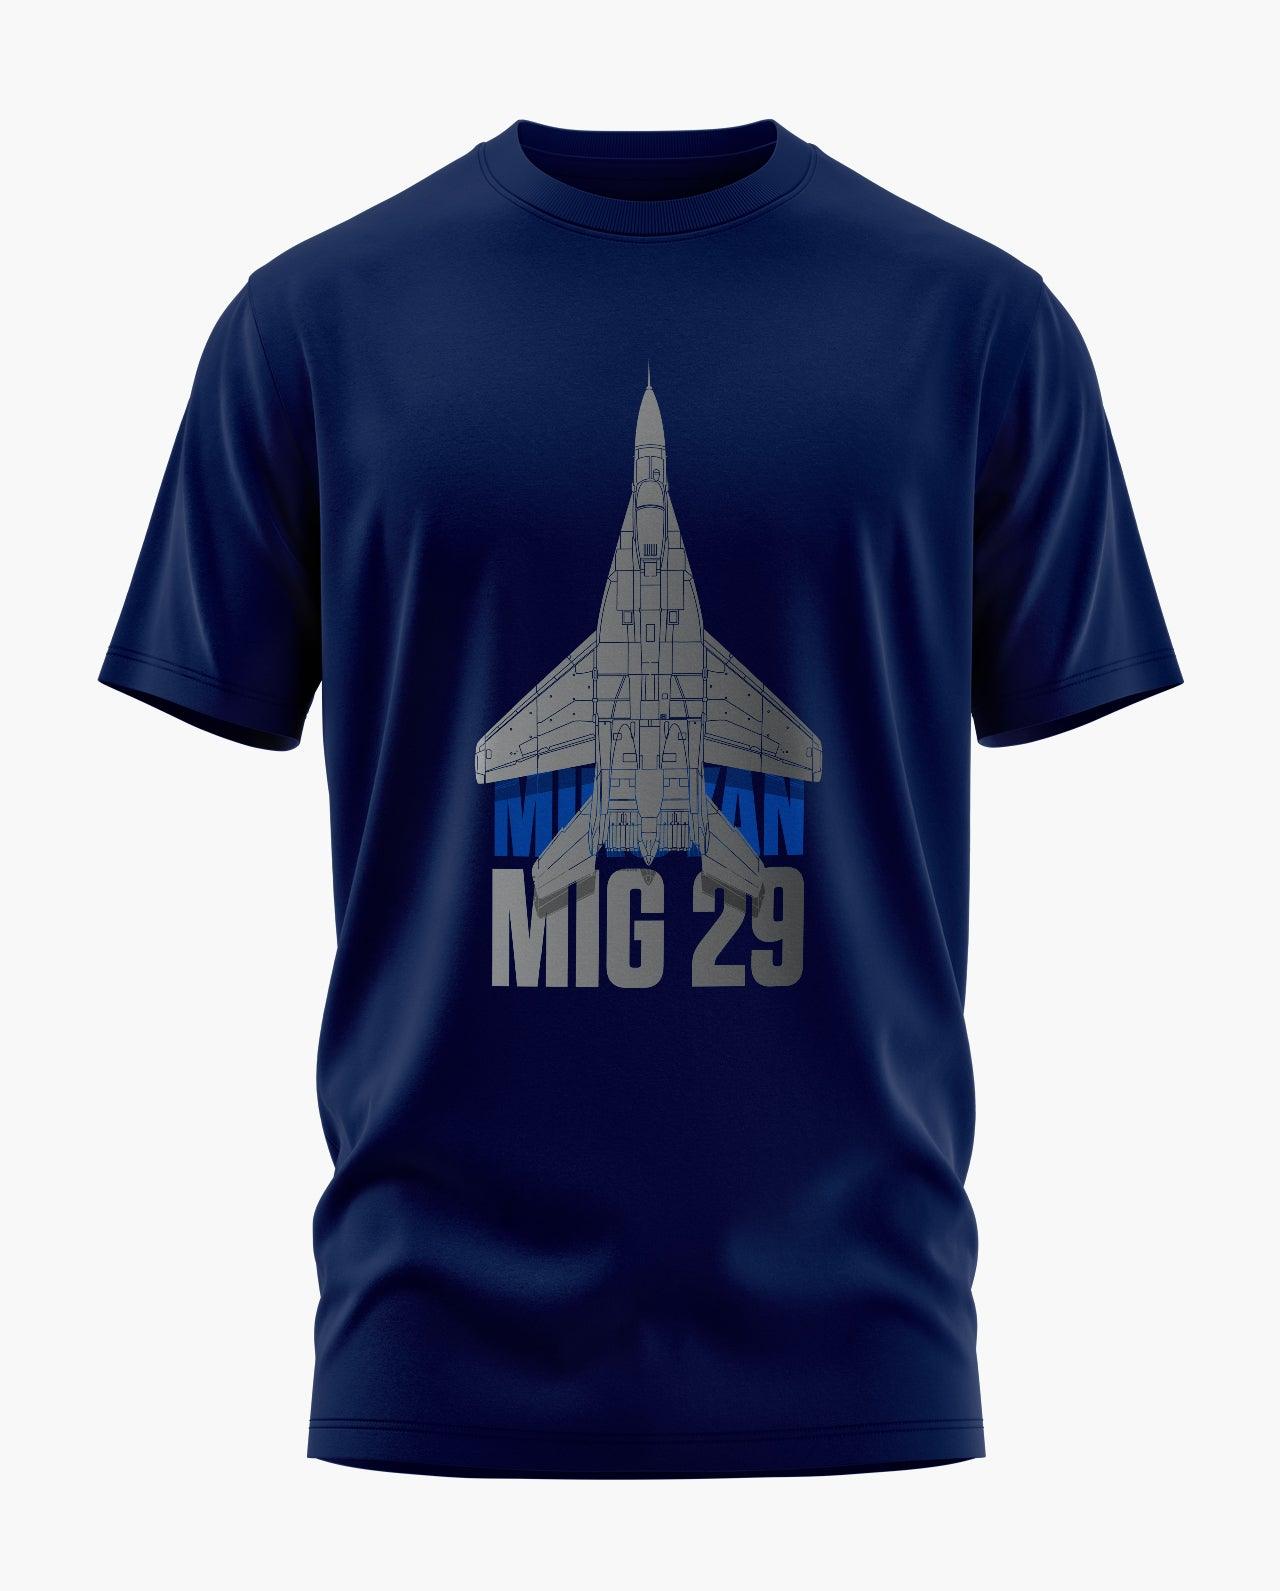 Mig 29 Metal T-Shirt - Aero Armour